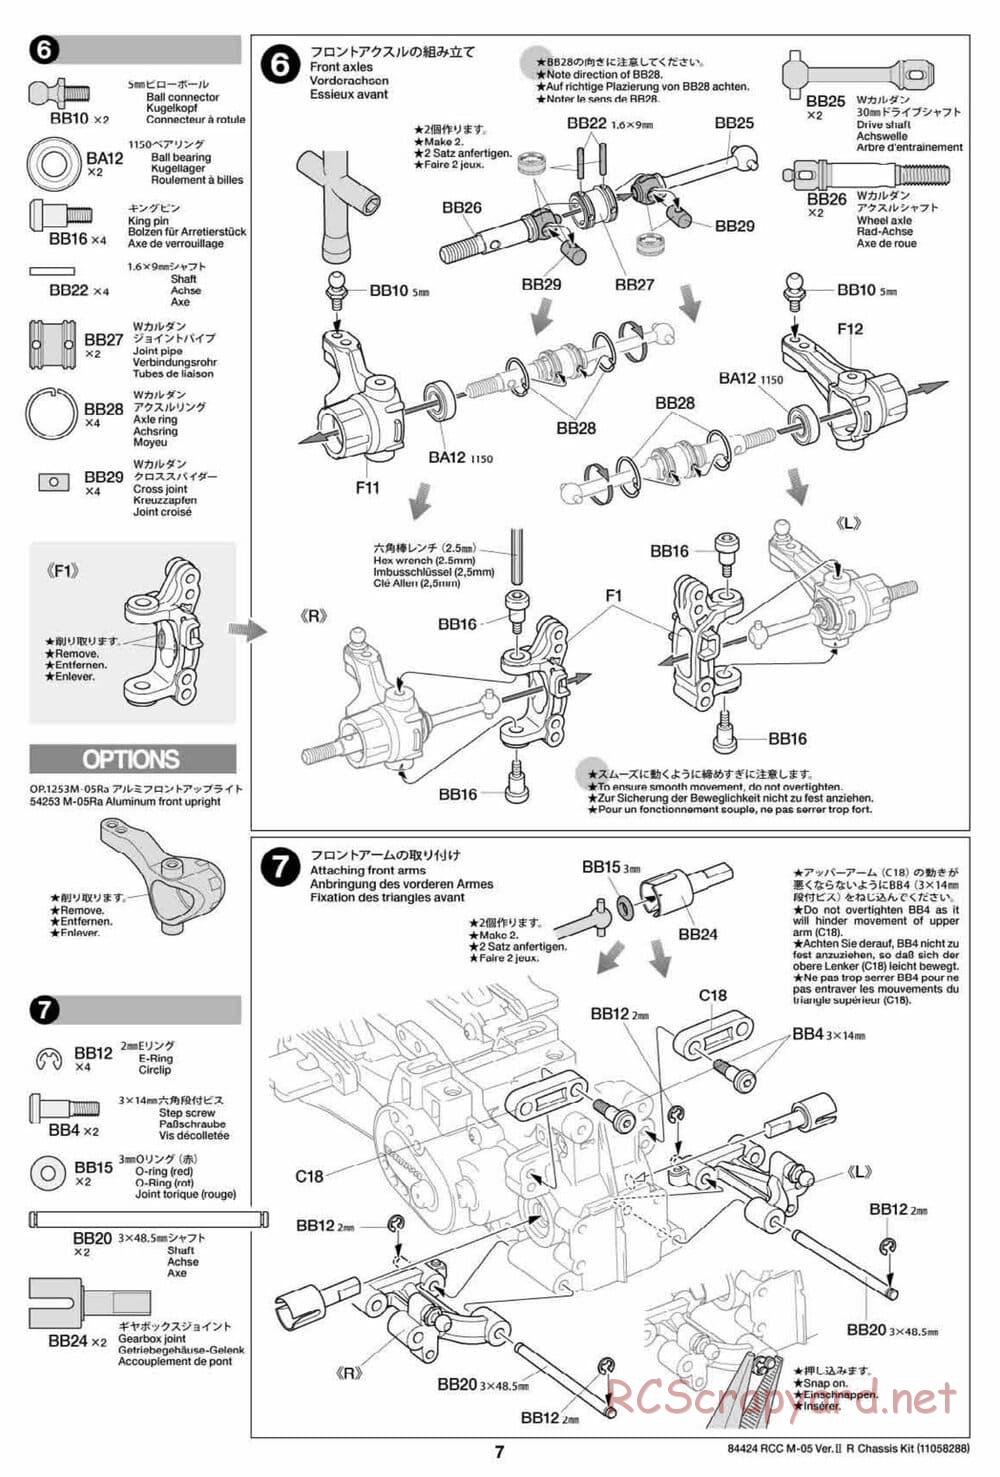 Tamiya - M-05 Ver.II R Chassis Chassis - Manual - Page 7